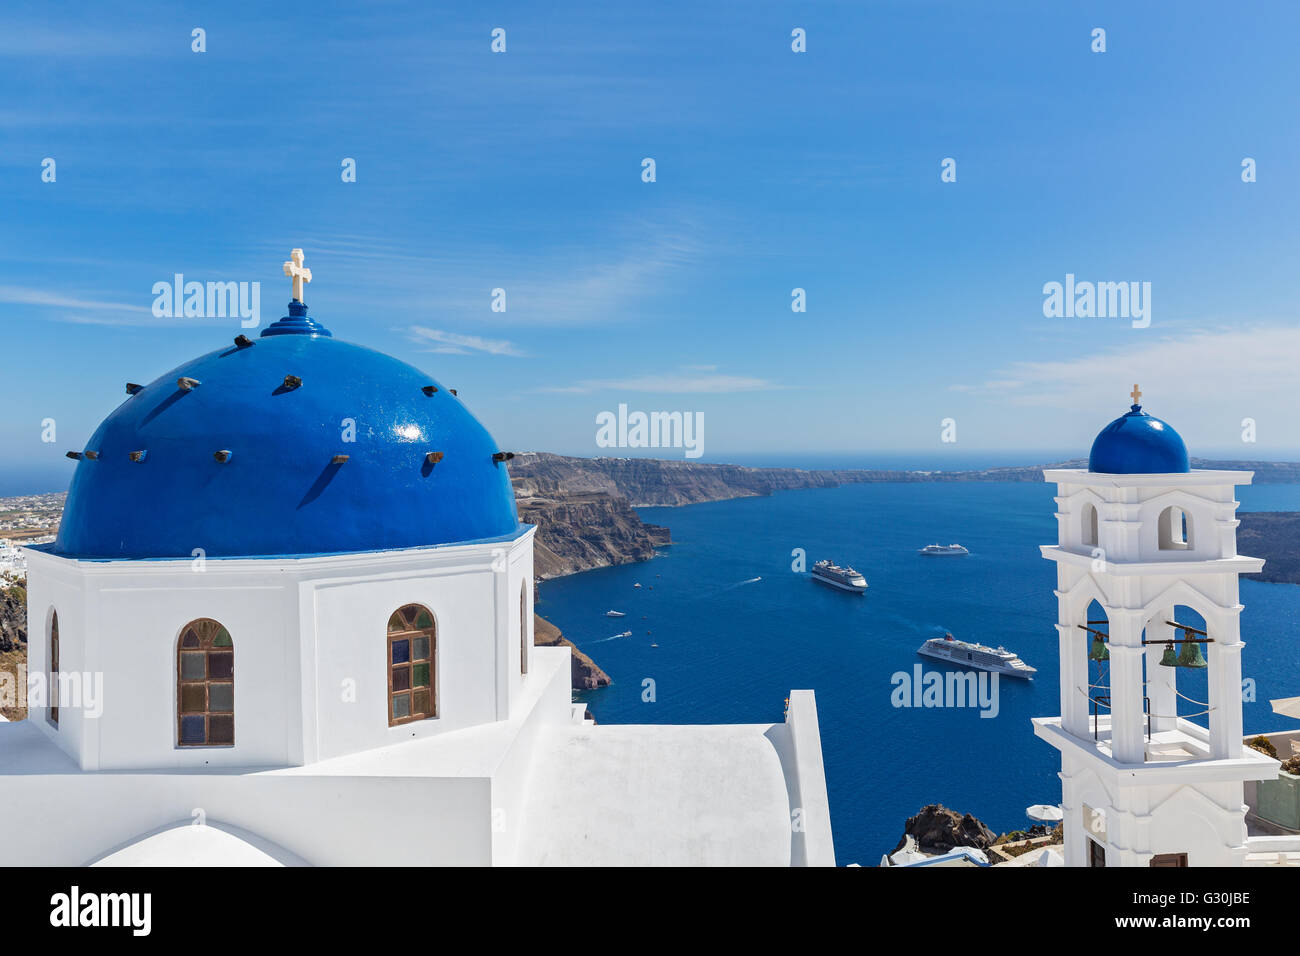 Architecture and landscape of the island of Santorini, Greece Stock Photo